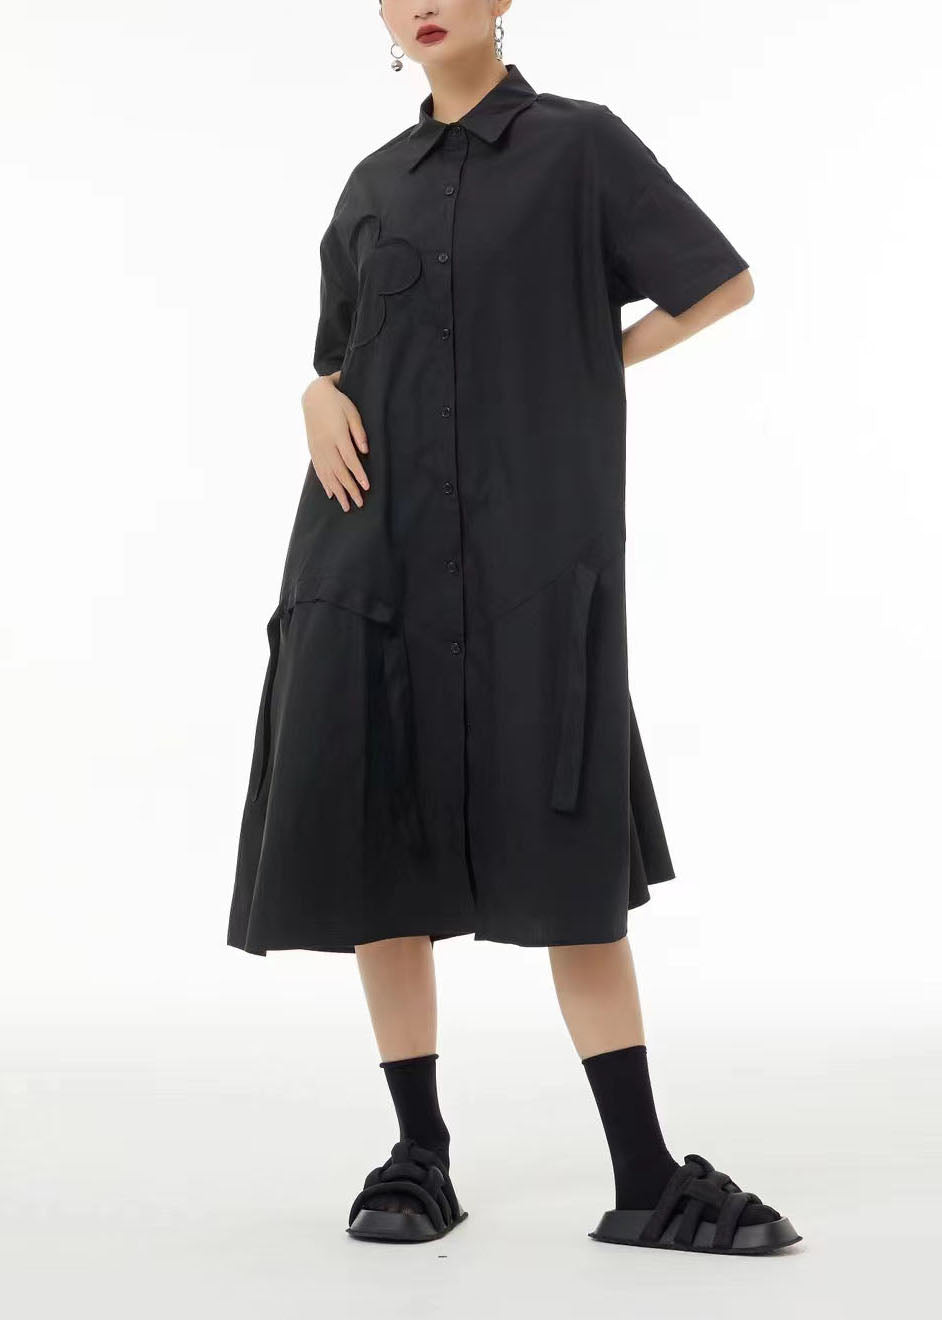 Boutique Black Peter Pan Collar Patchwork Cotton Long Dresses Summer TS1058